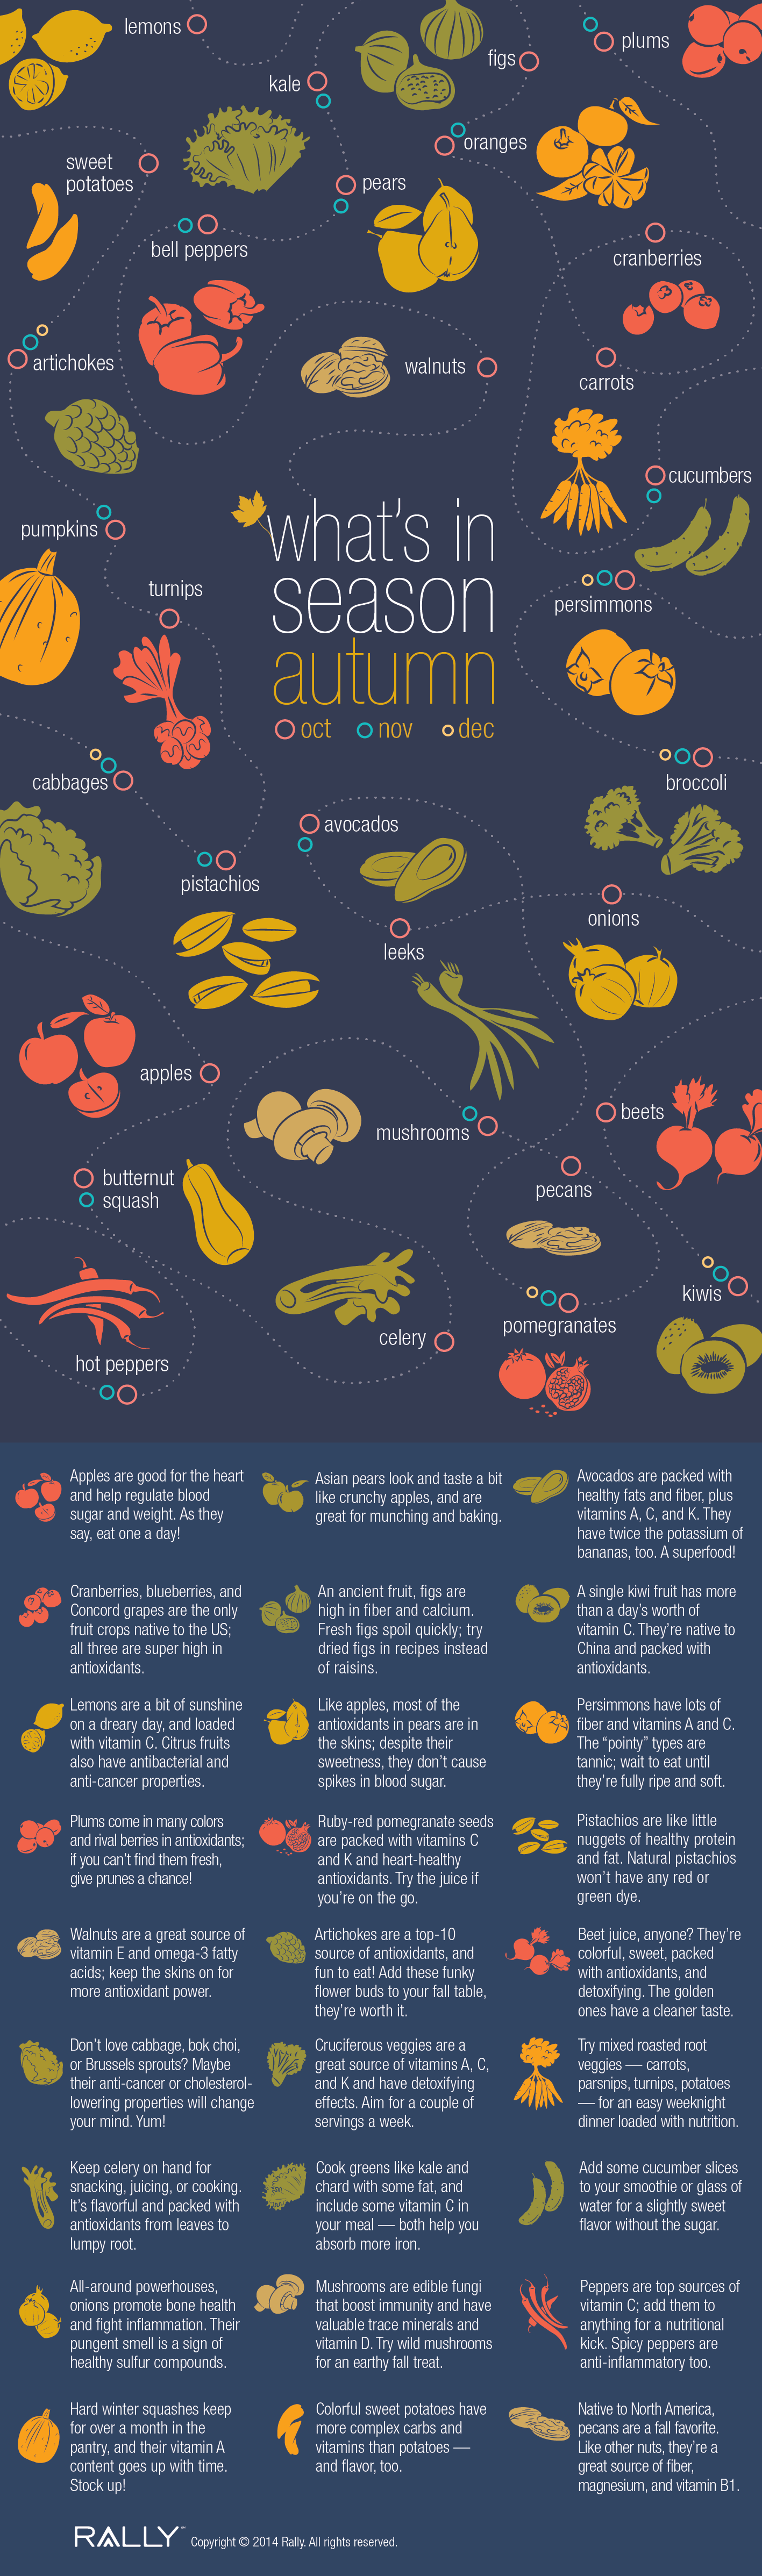 Fall Food Infographic - seasonal produce